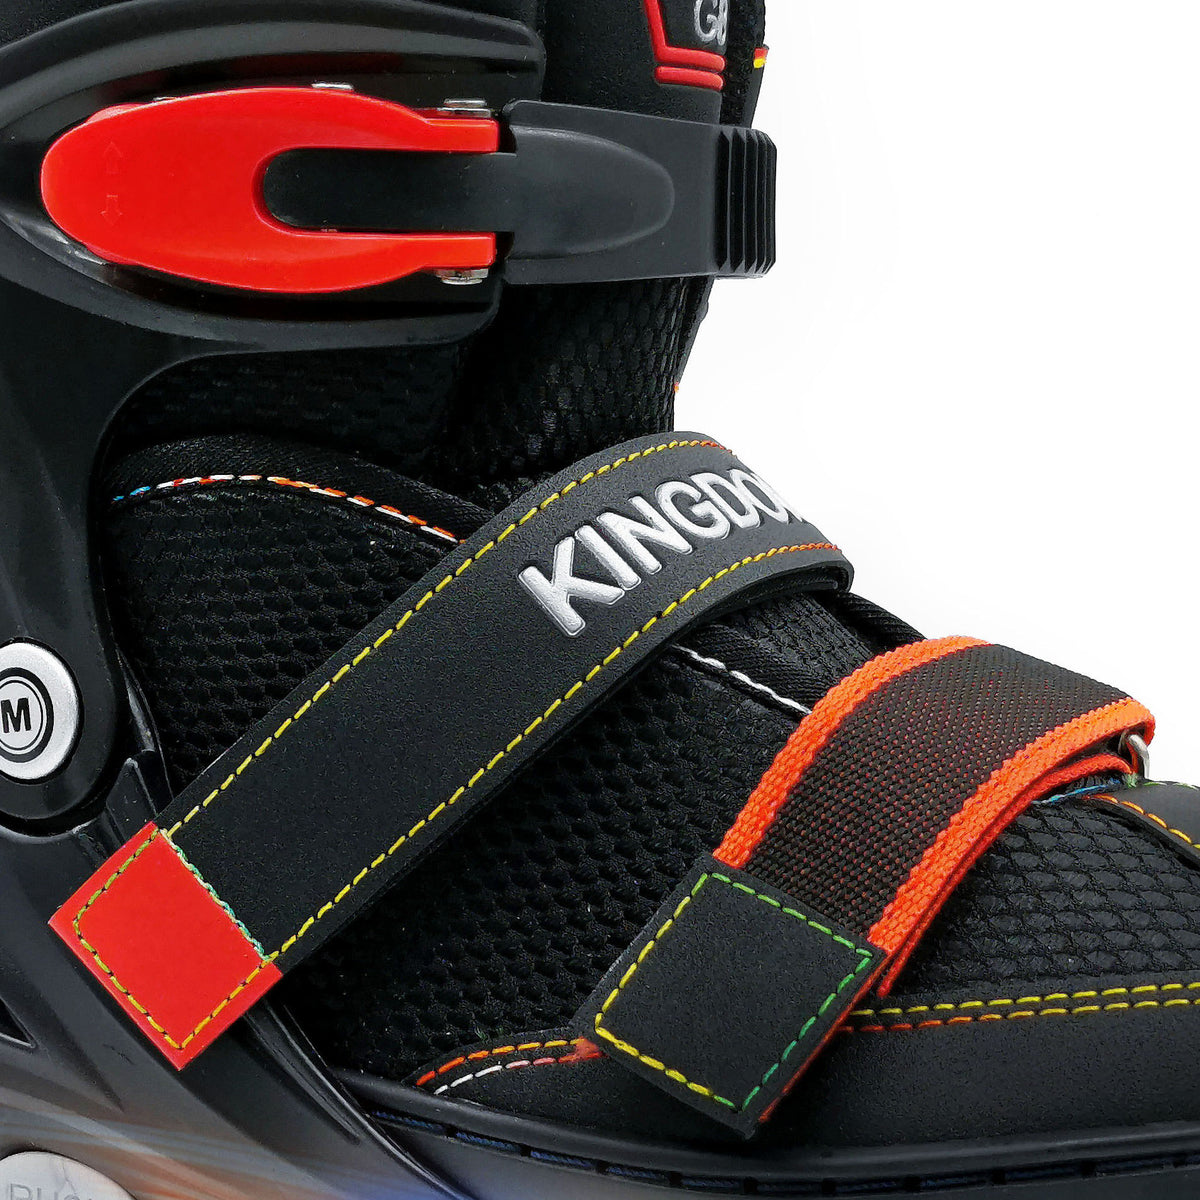 Kingdom GB Metro Flash Adjustable Inline Roller Skates Illuminating Light up Wheels Black Red